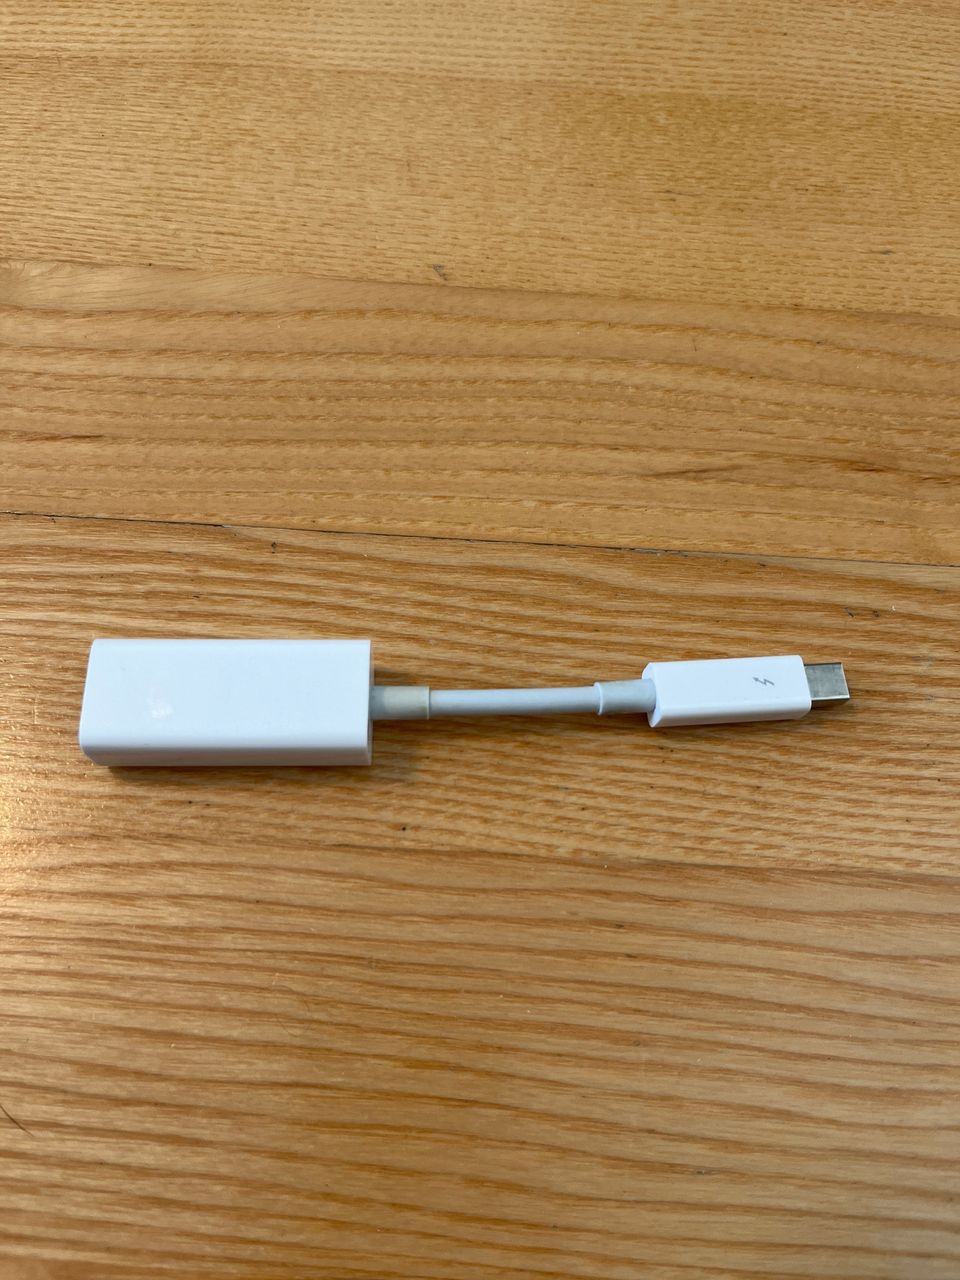 Apple Thunderbolt - Gigabit Ethernet adapteri